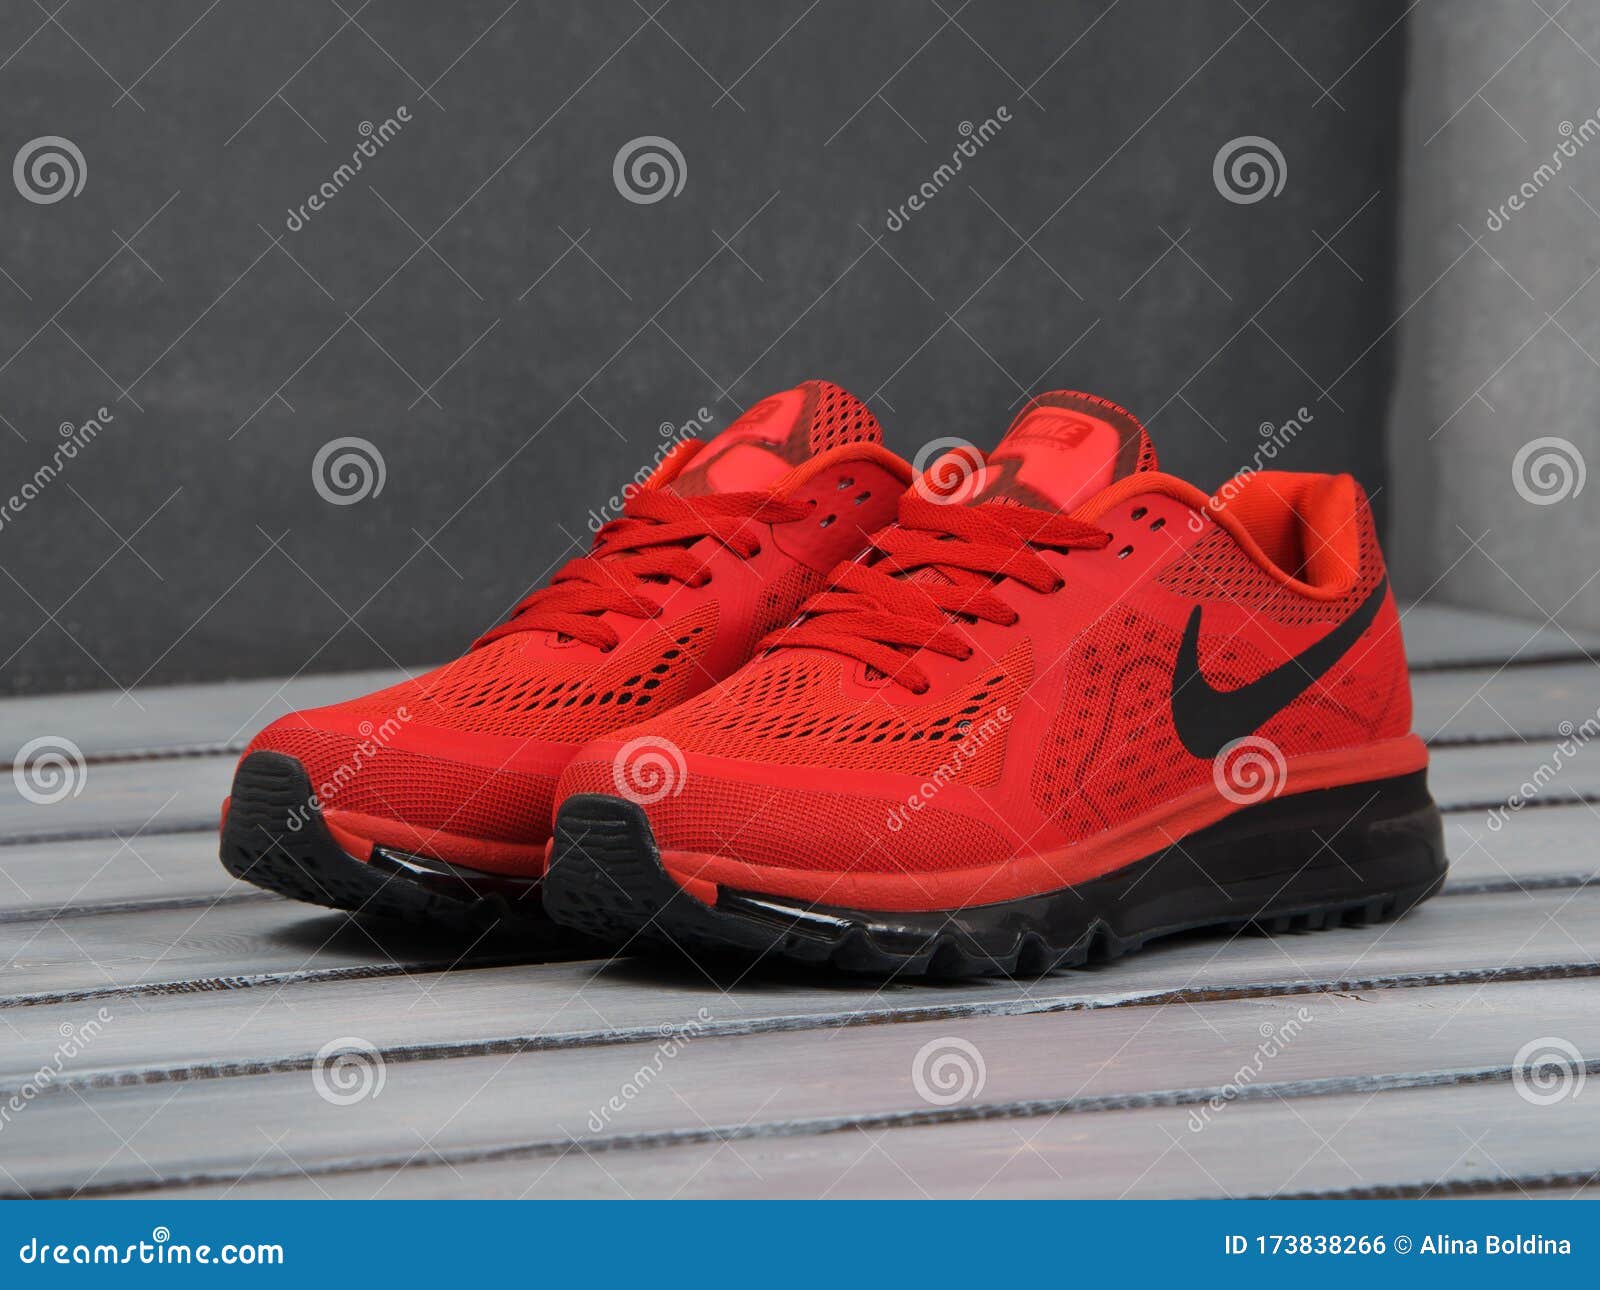 air max 2014 running shoe